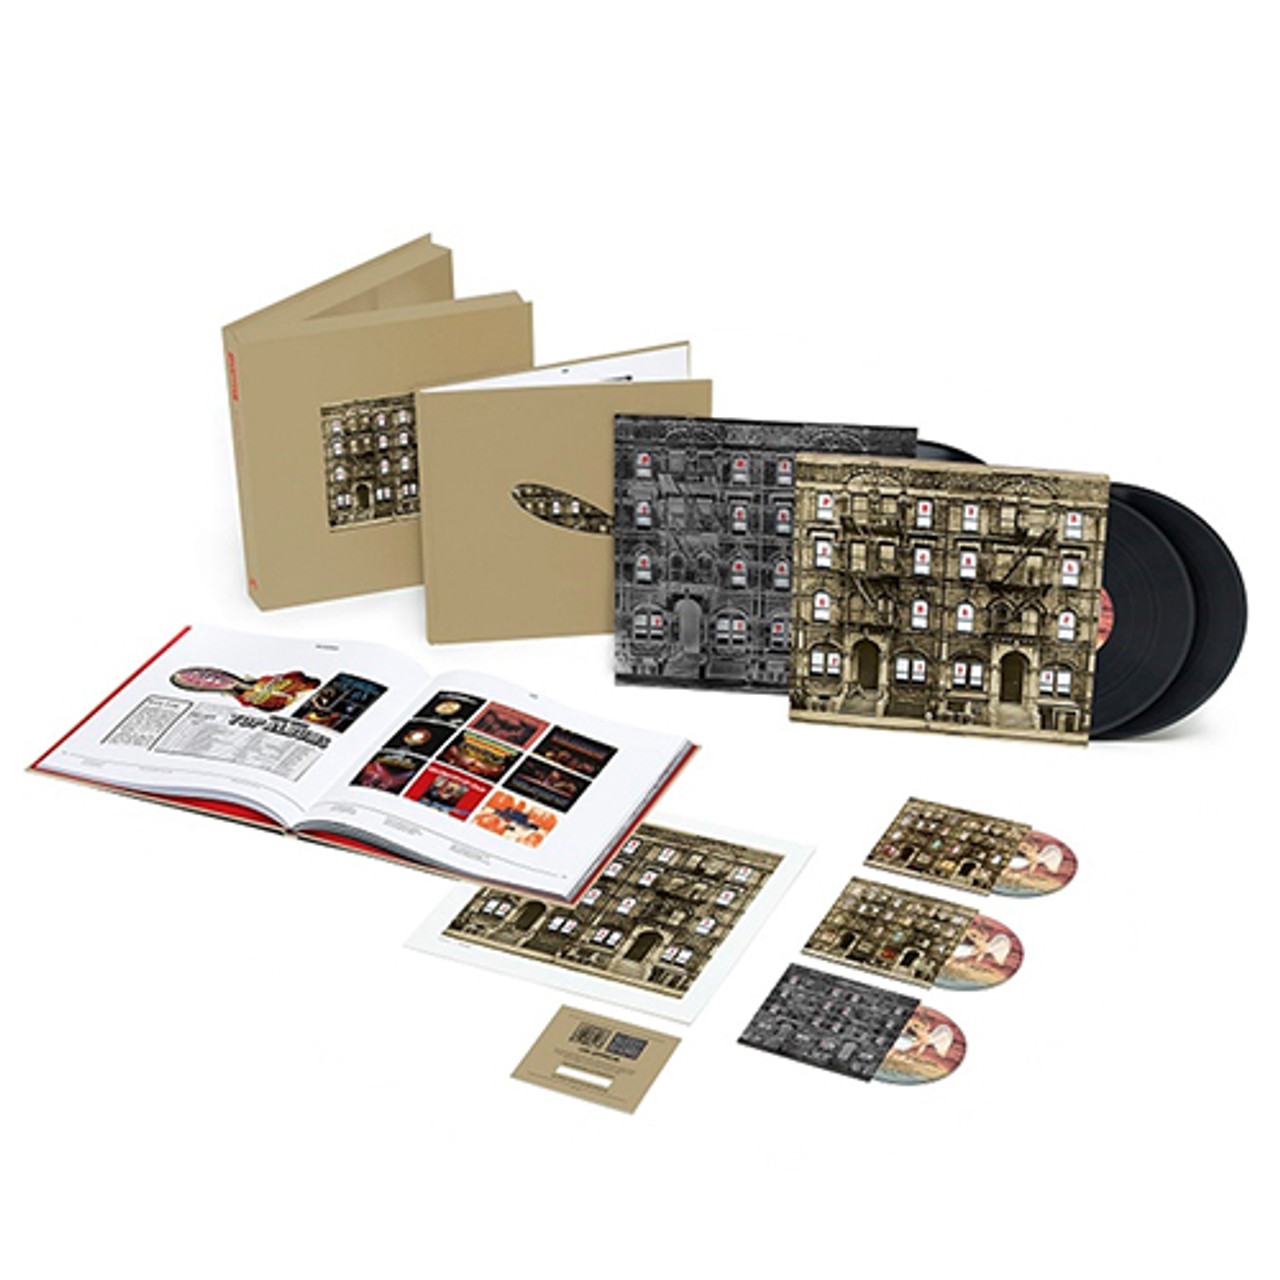 Led Zeppelin - Physical Graffiti: Super Deluxe Edition (3CD + 180G Vinyl  3LP Box Set) * * *